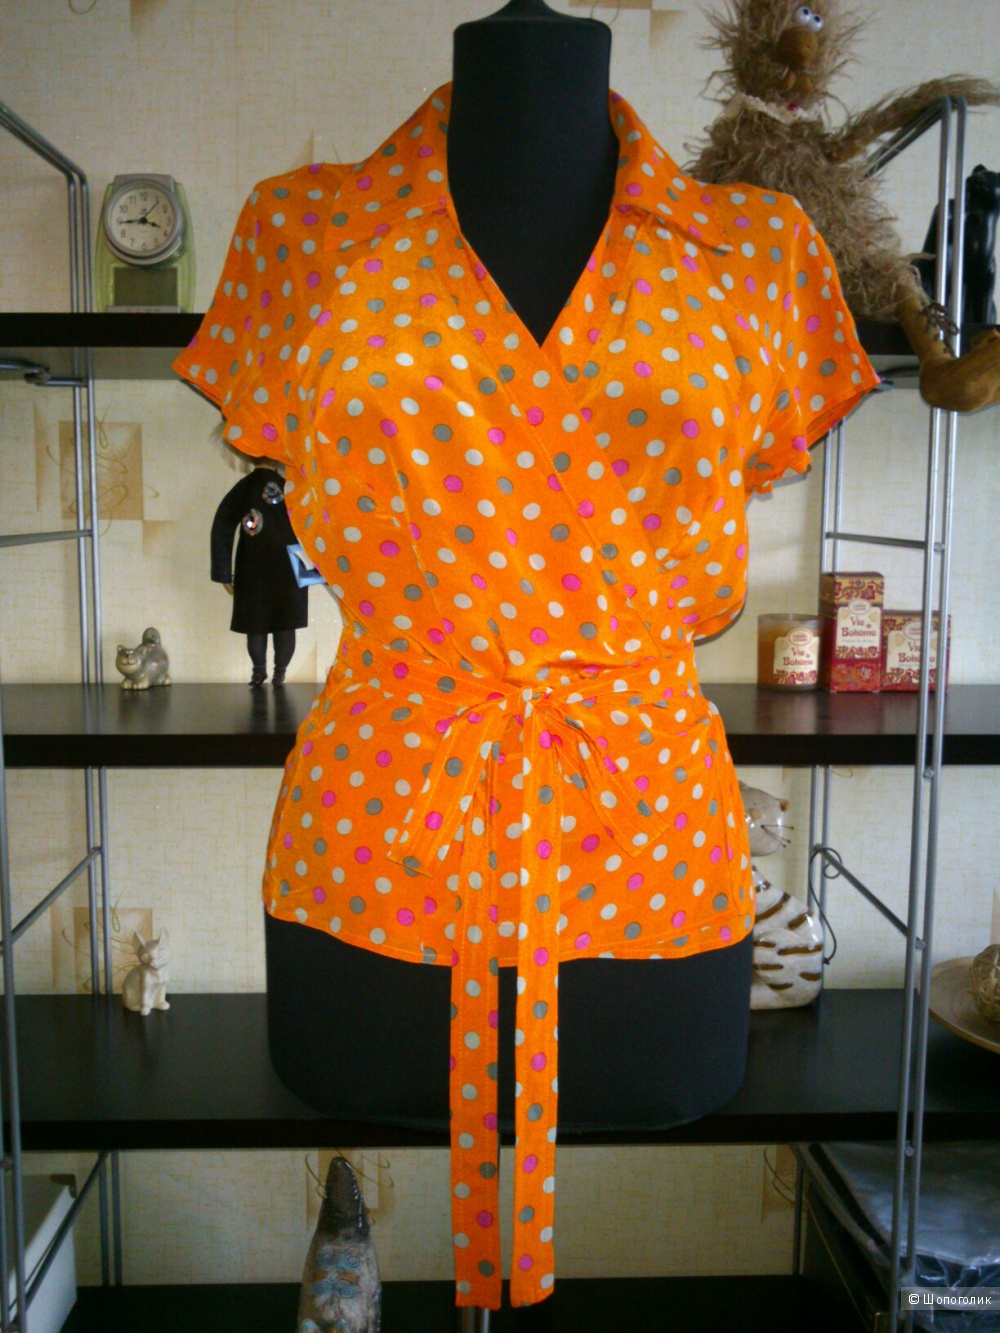 MARELLA, шелковая блузка. Размер: IT46  (на 44-46 размер).